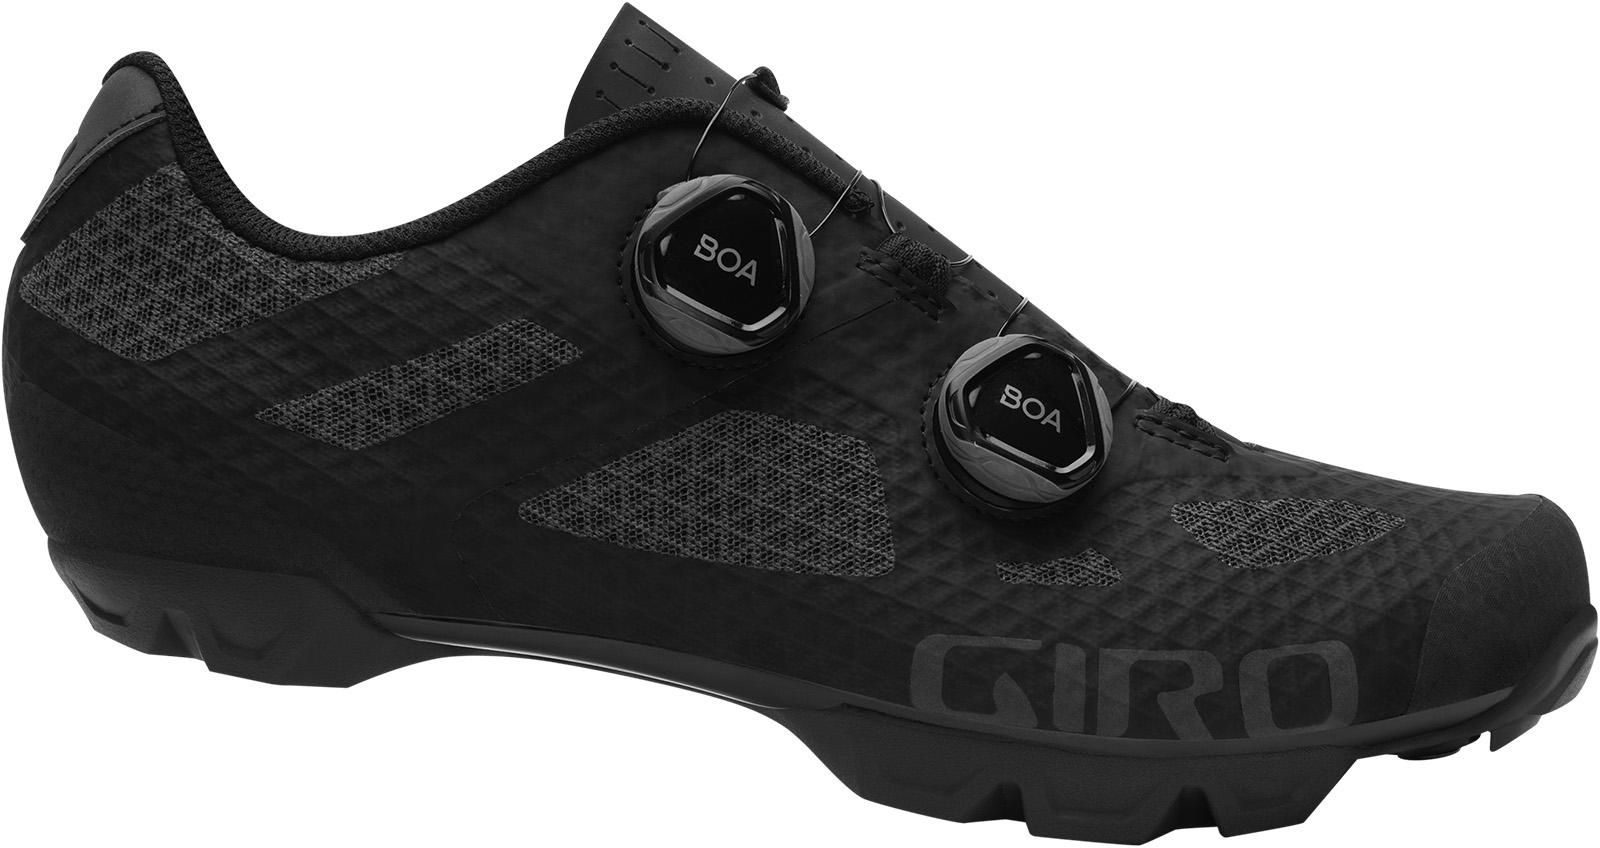 Giro Sector Mtb Cycling Shoes - Black/grey